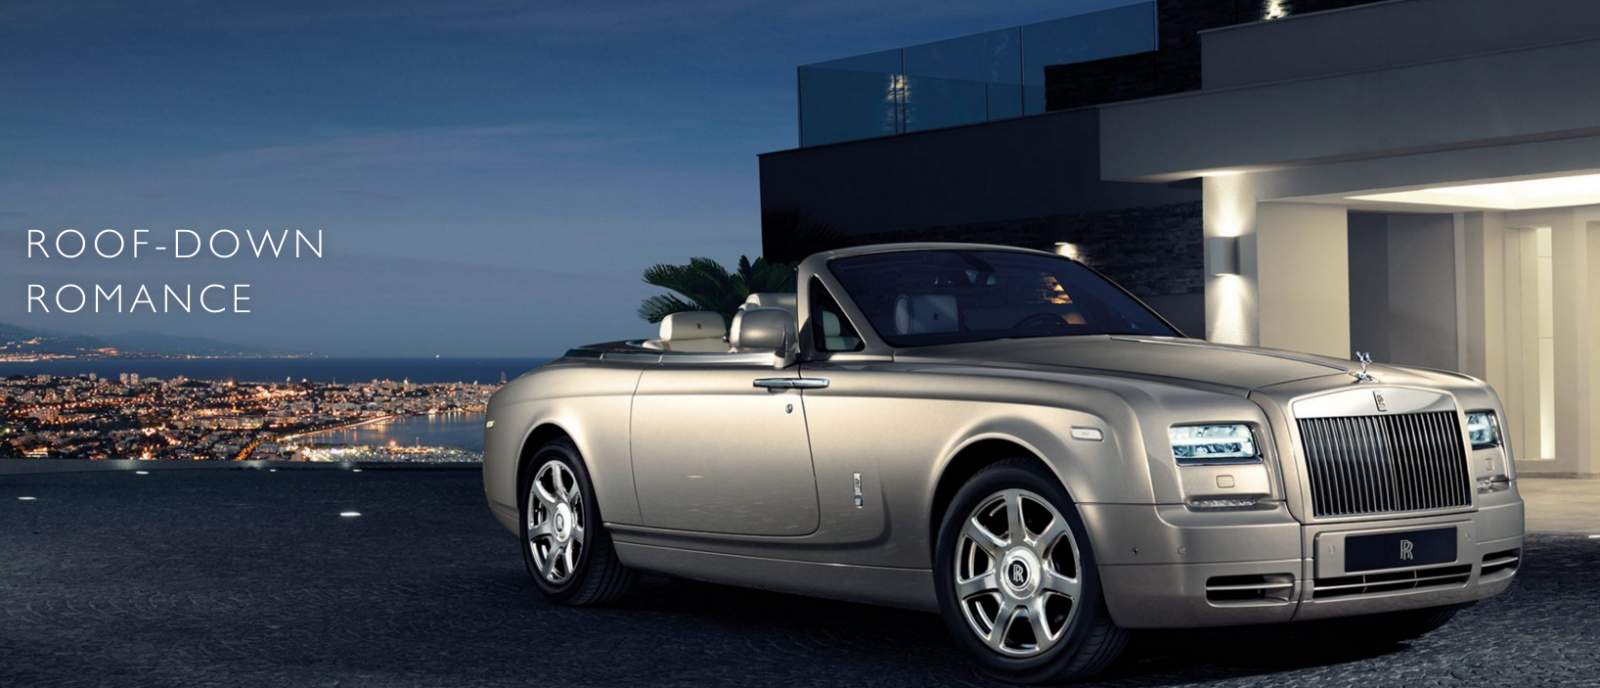 RollsRoyce Phantom Drophead Coupe Rental  Book Luxury Car